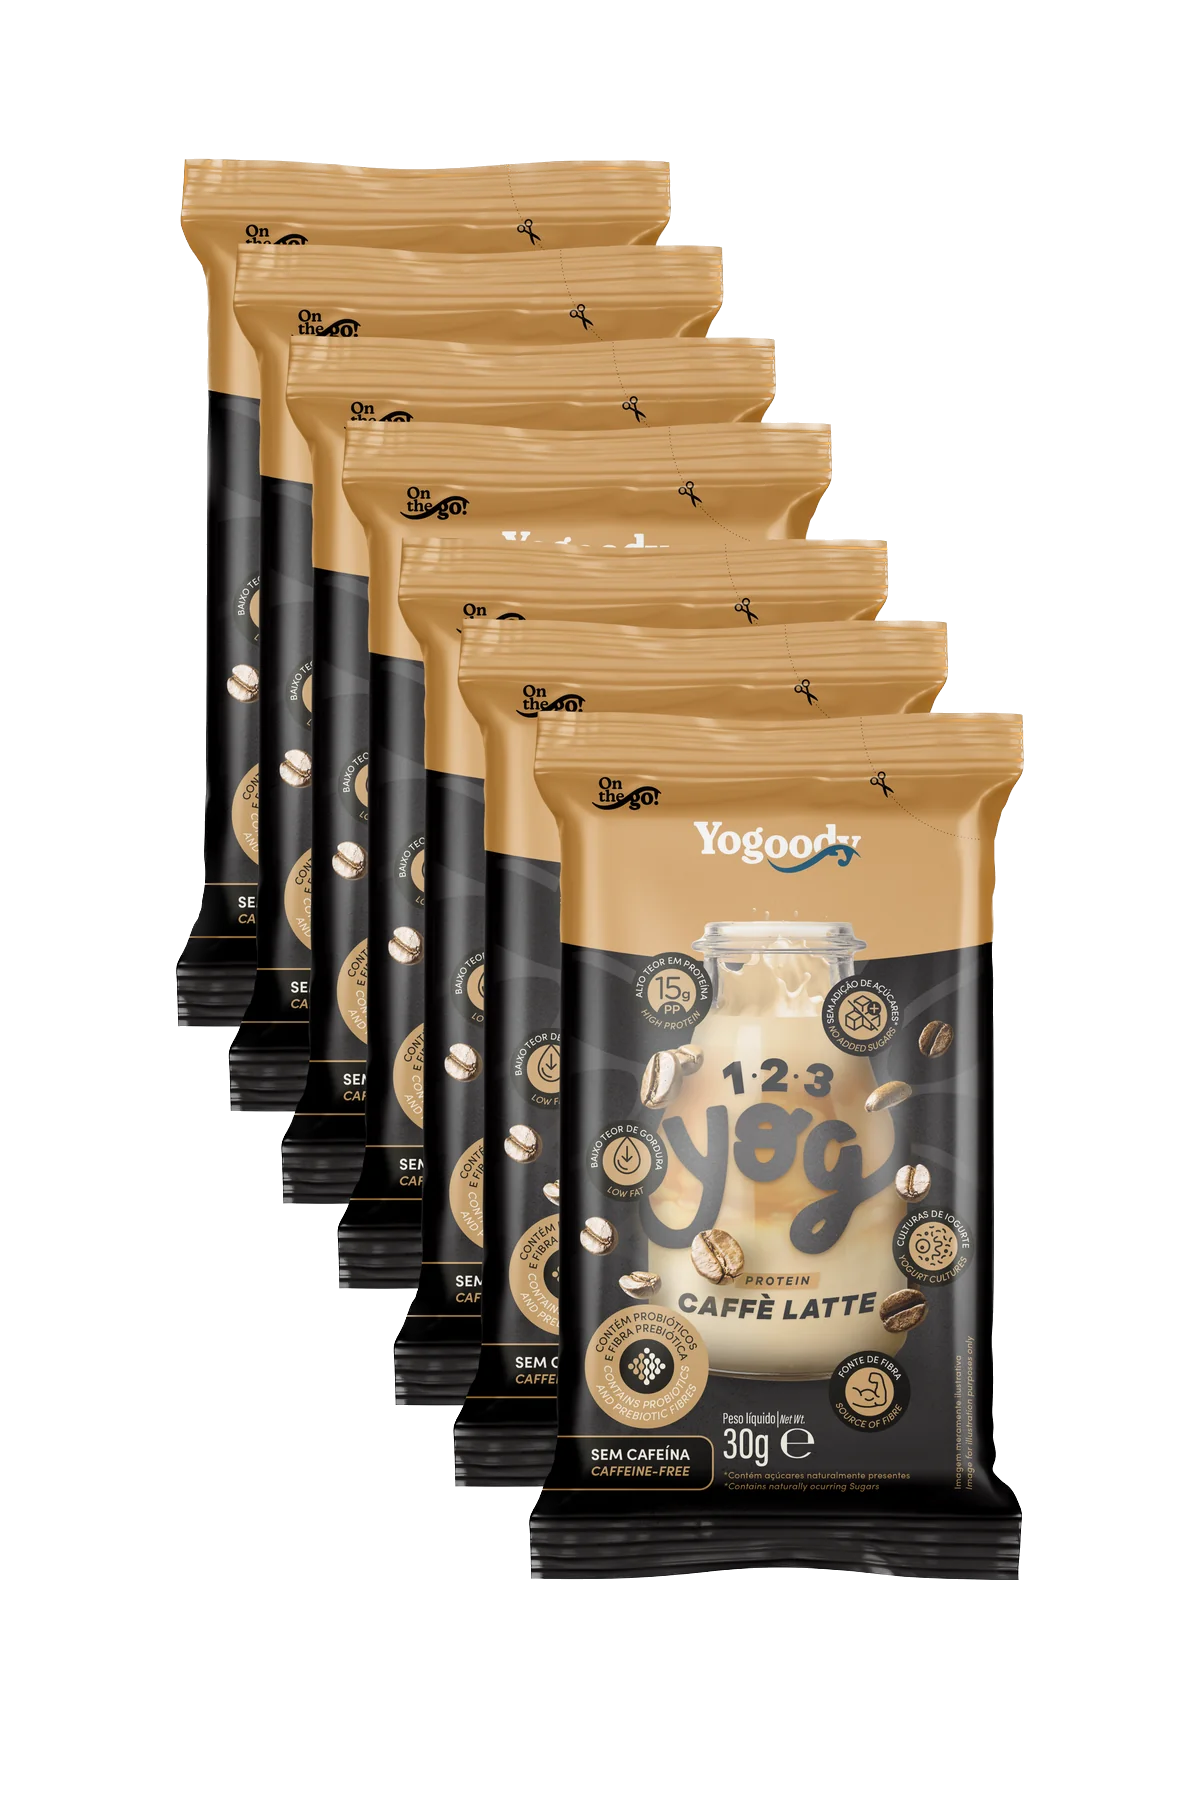 1.2.3. YOG Protein Caffe Latte (caffeine-free) Flavoured Shake - 7 x 30g sachets